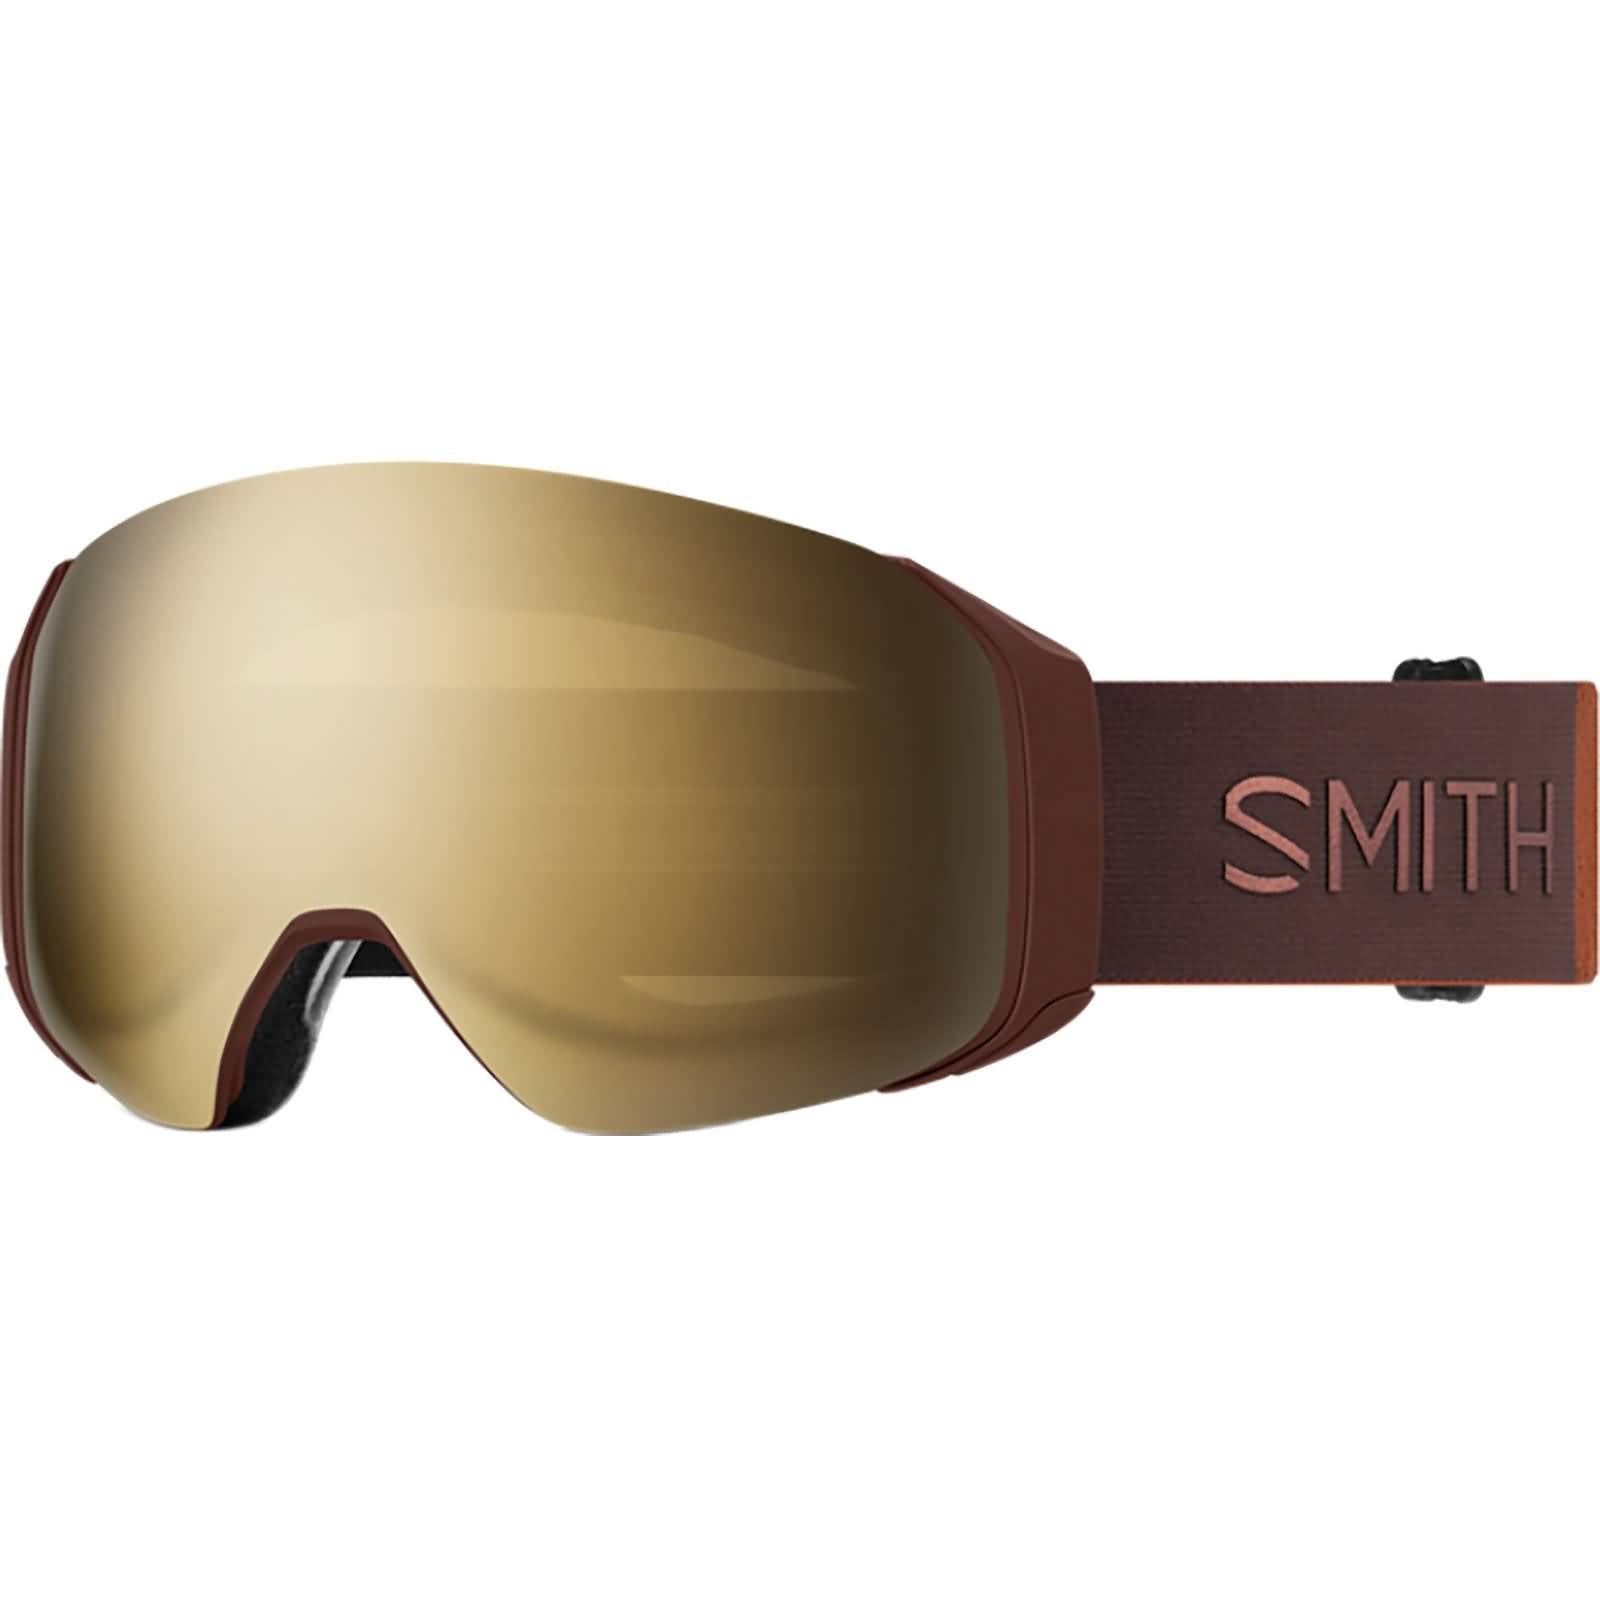 Smith Optics 4D MAG S Chromapop Adult Snow Goggles-M007600NN99MN